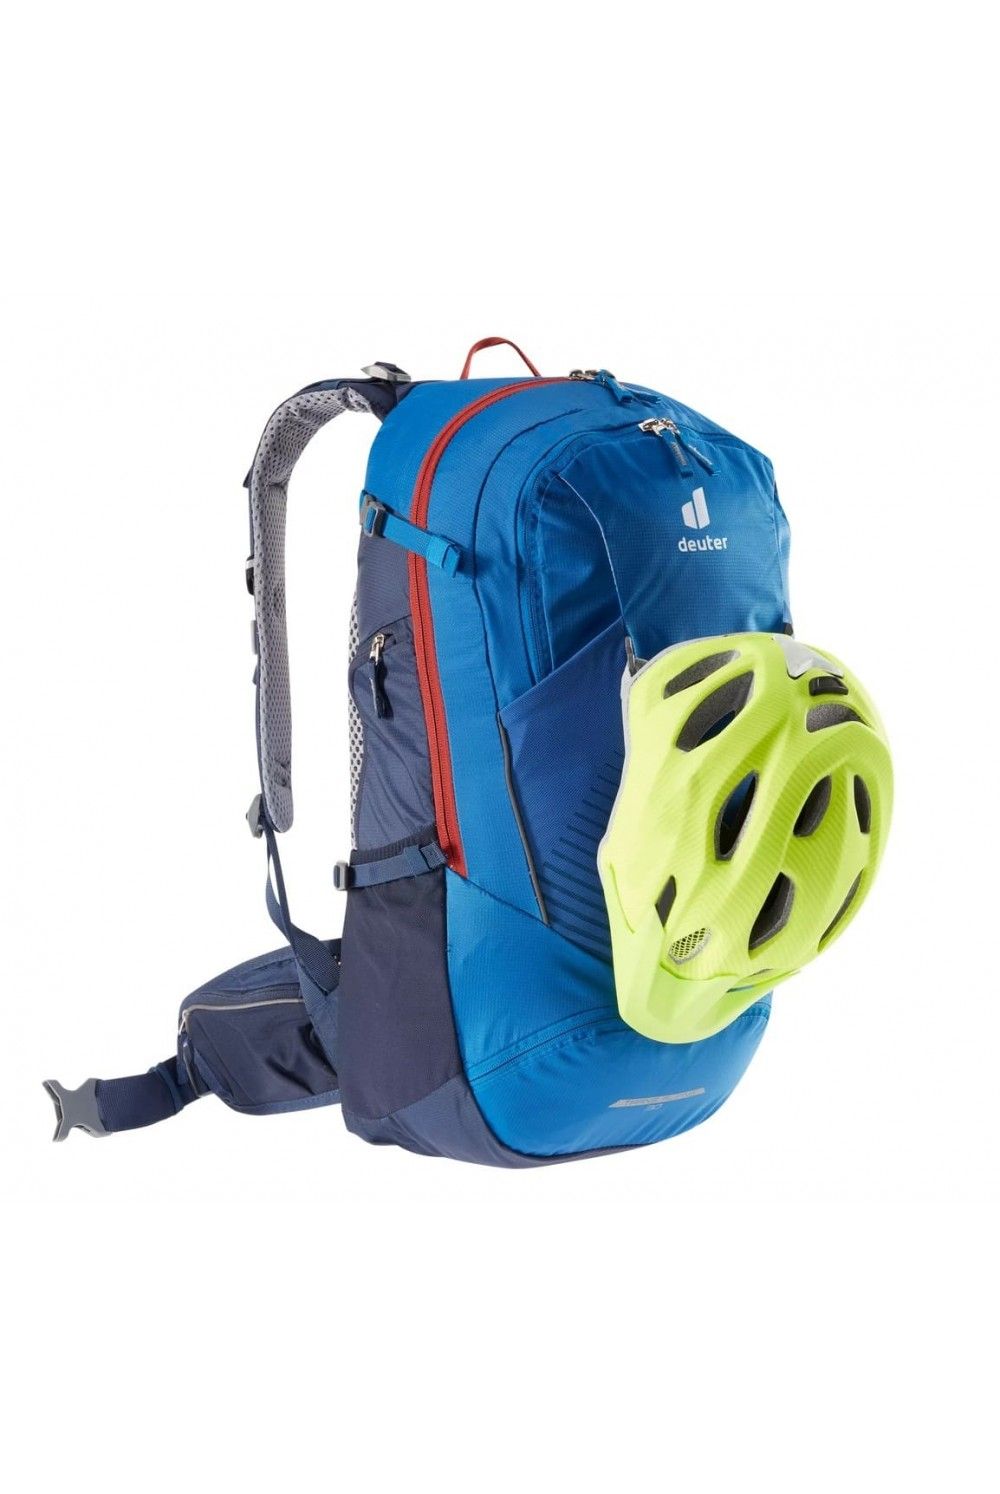 Deuter Trans Alpine 30 bike backpack